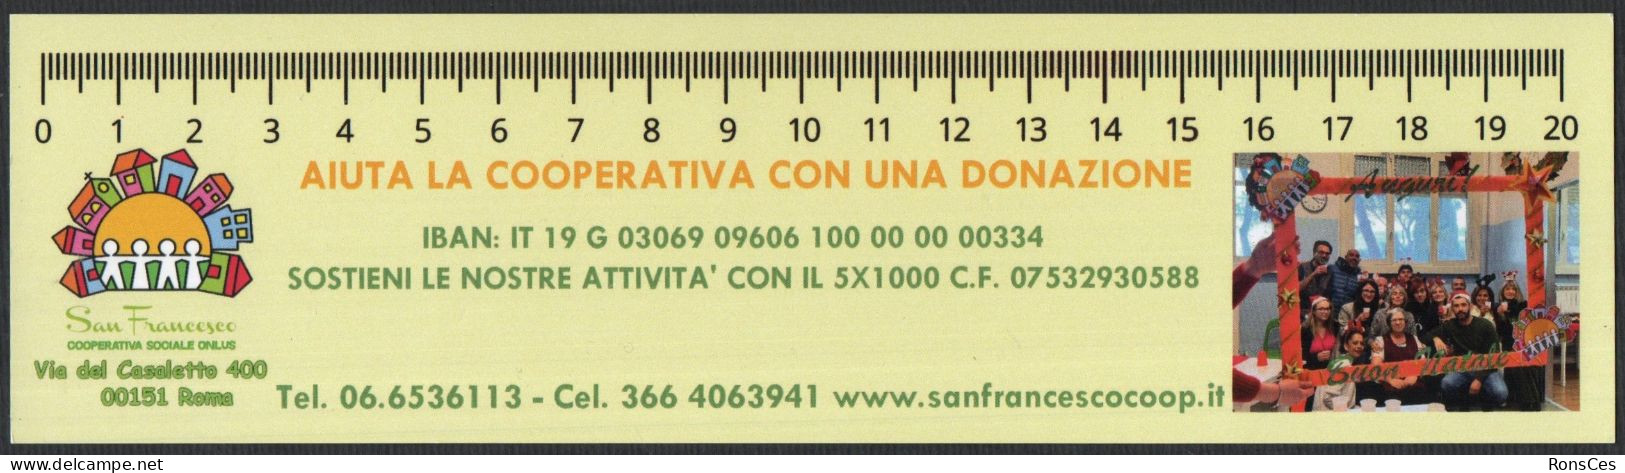 ITALIA - SEGNALIBRO / BOOKMARK - COOPERATIVA SOCIALE ONLUS SAN FRANCESCO - I - Segnalibri